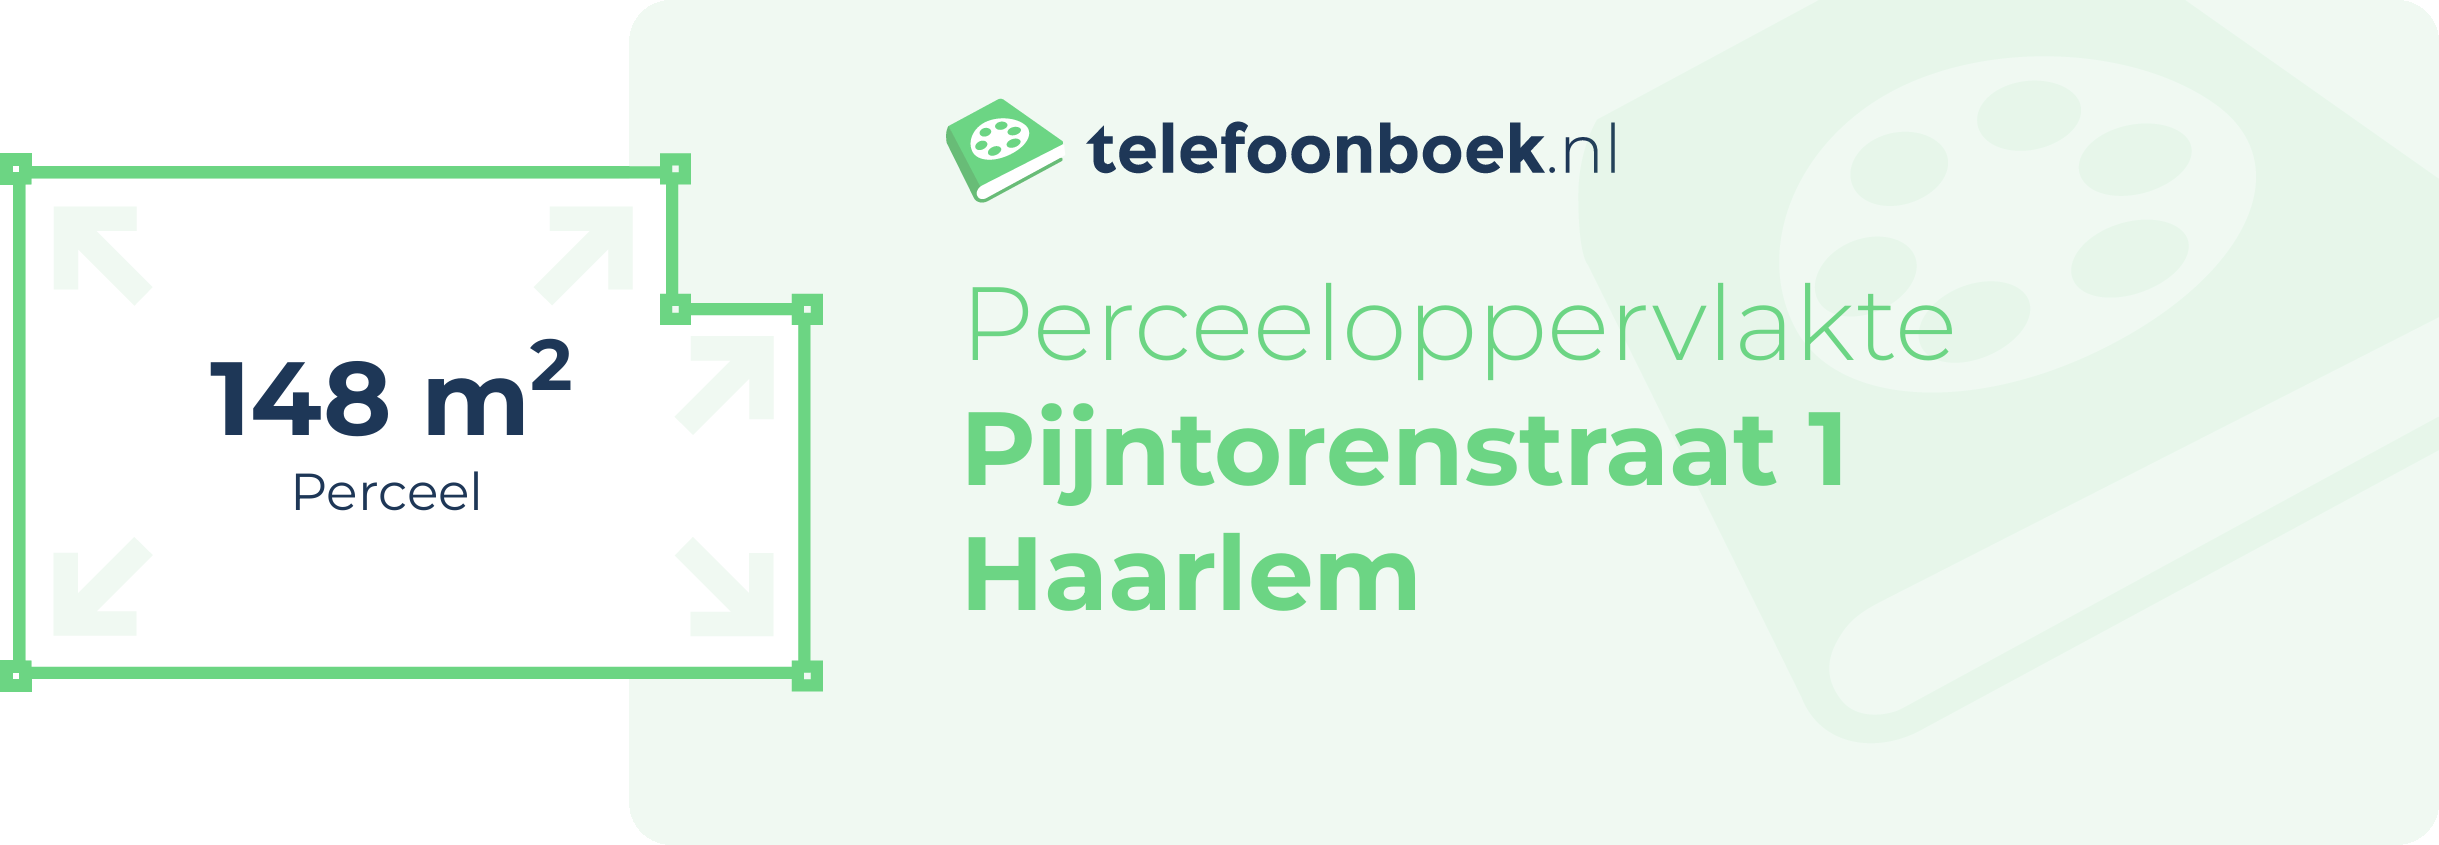 Perceeloppervlakte Pijntorenstraat 1 Haarlem